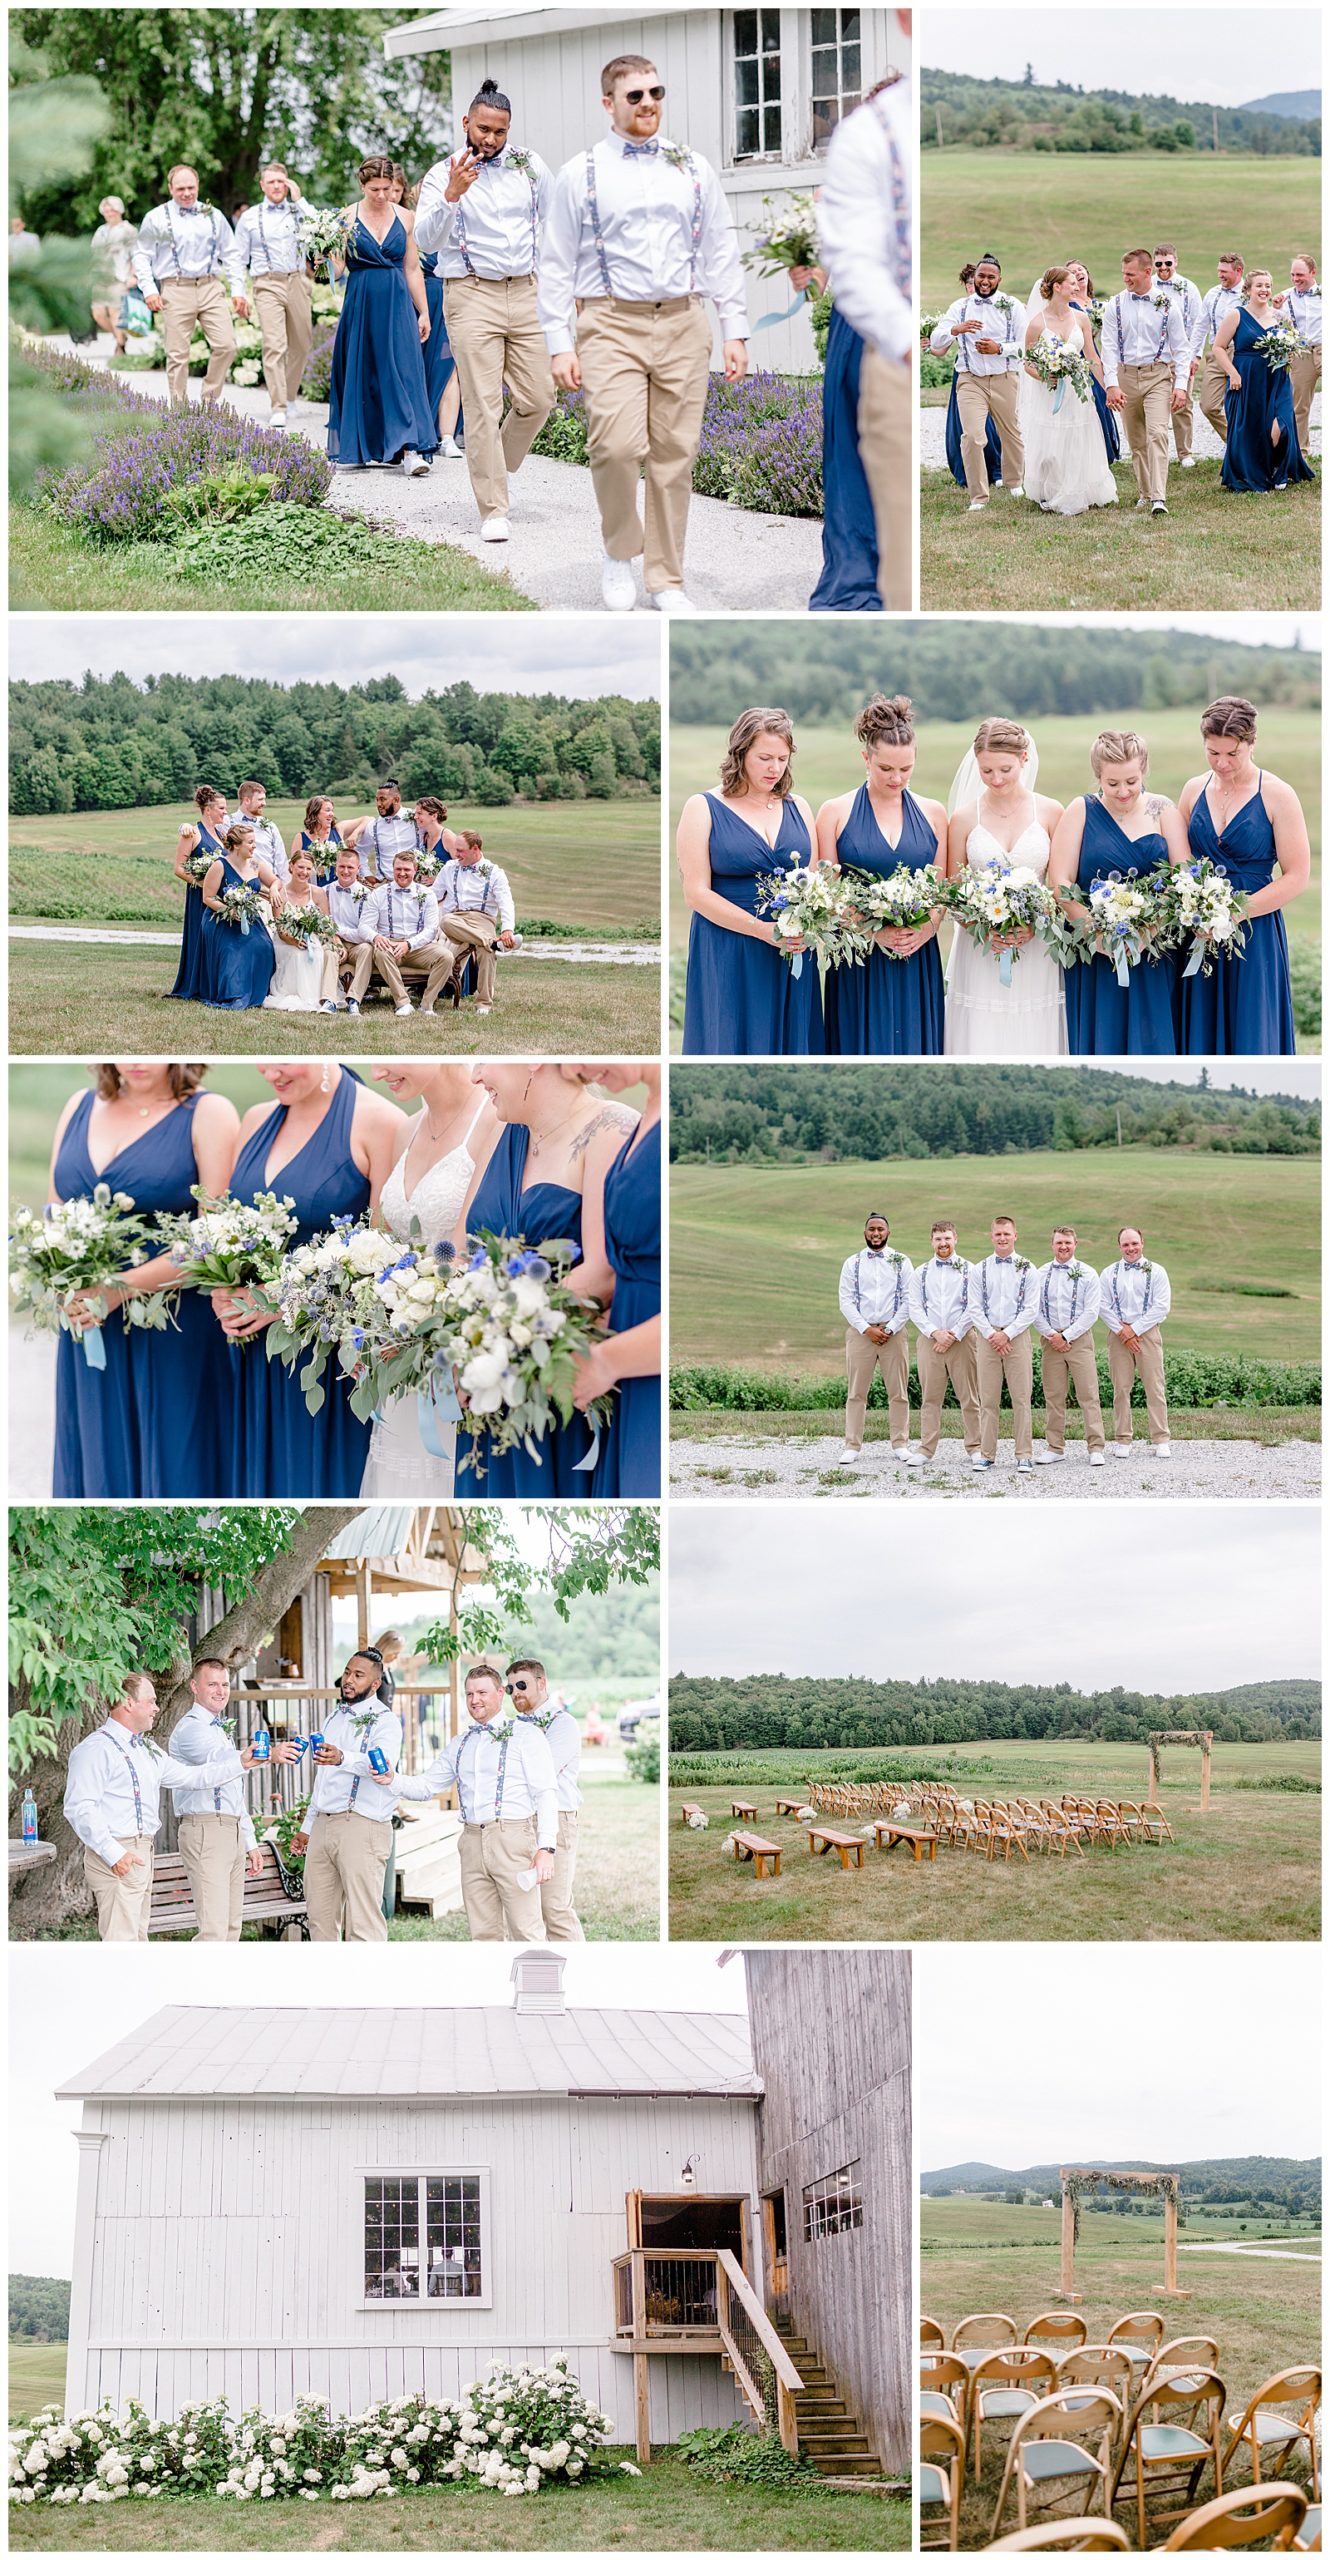 VT wedding photo collage